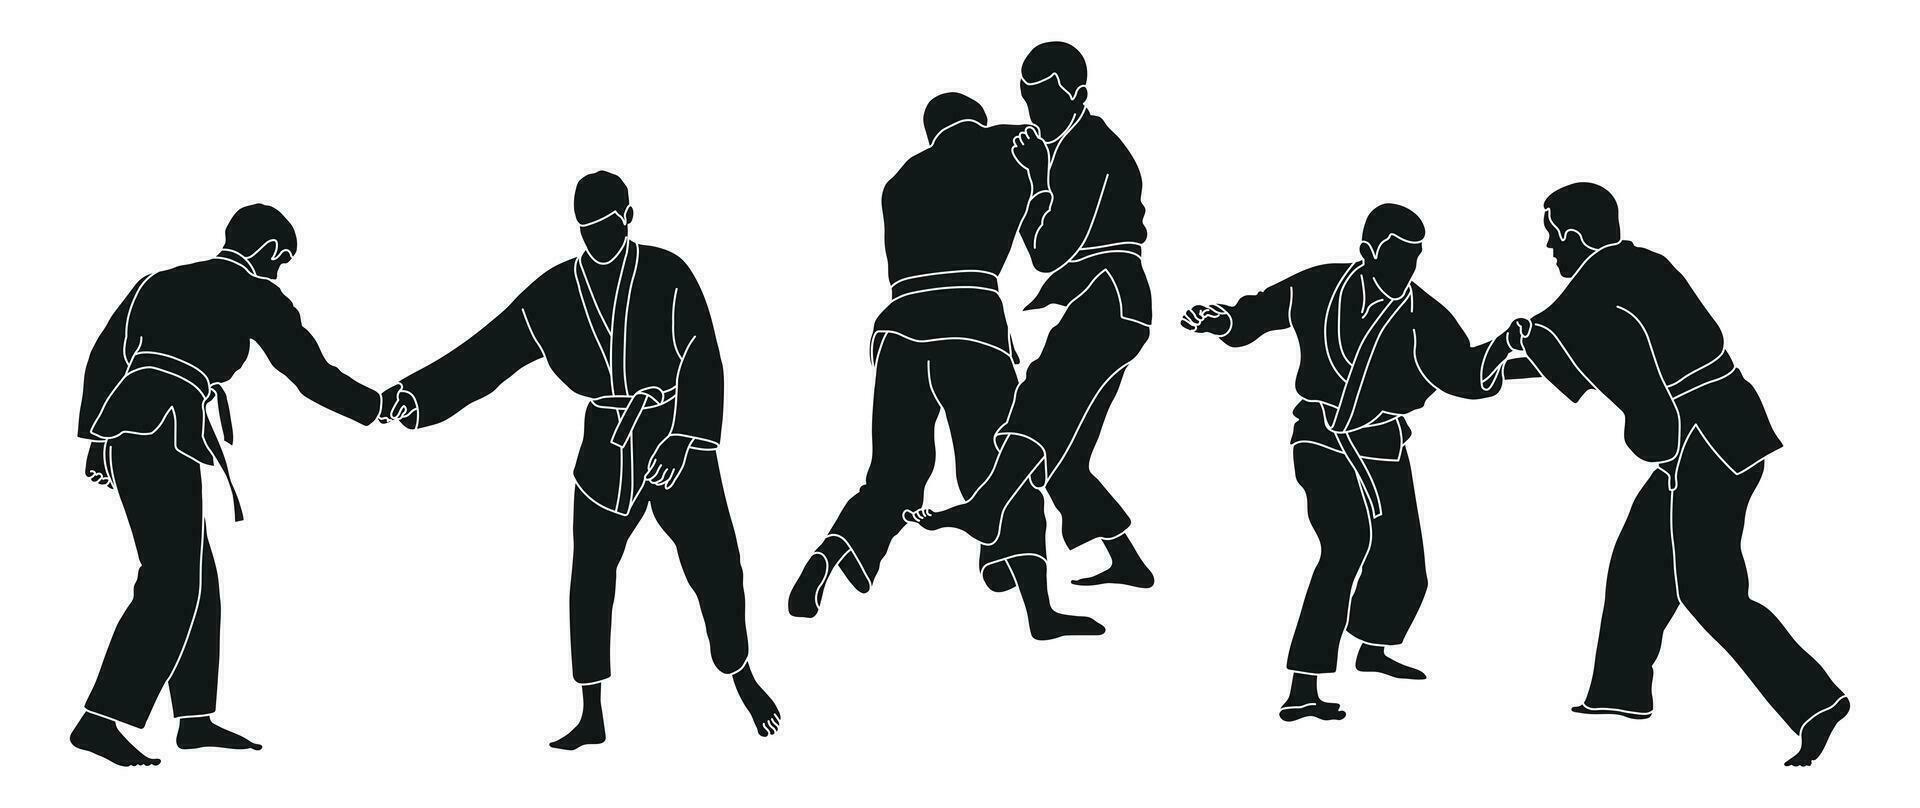 bosquejo judoista, judoca, atleta duelo, luchar, judo, deporte figura vector